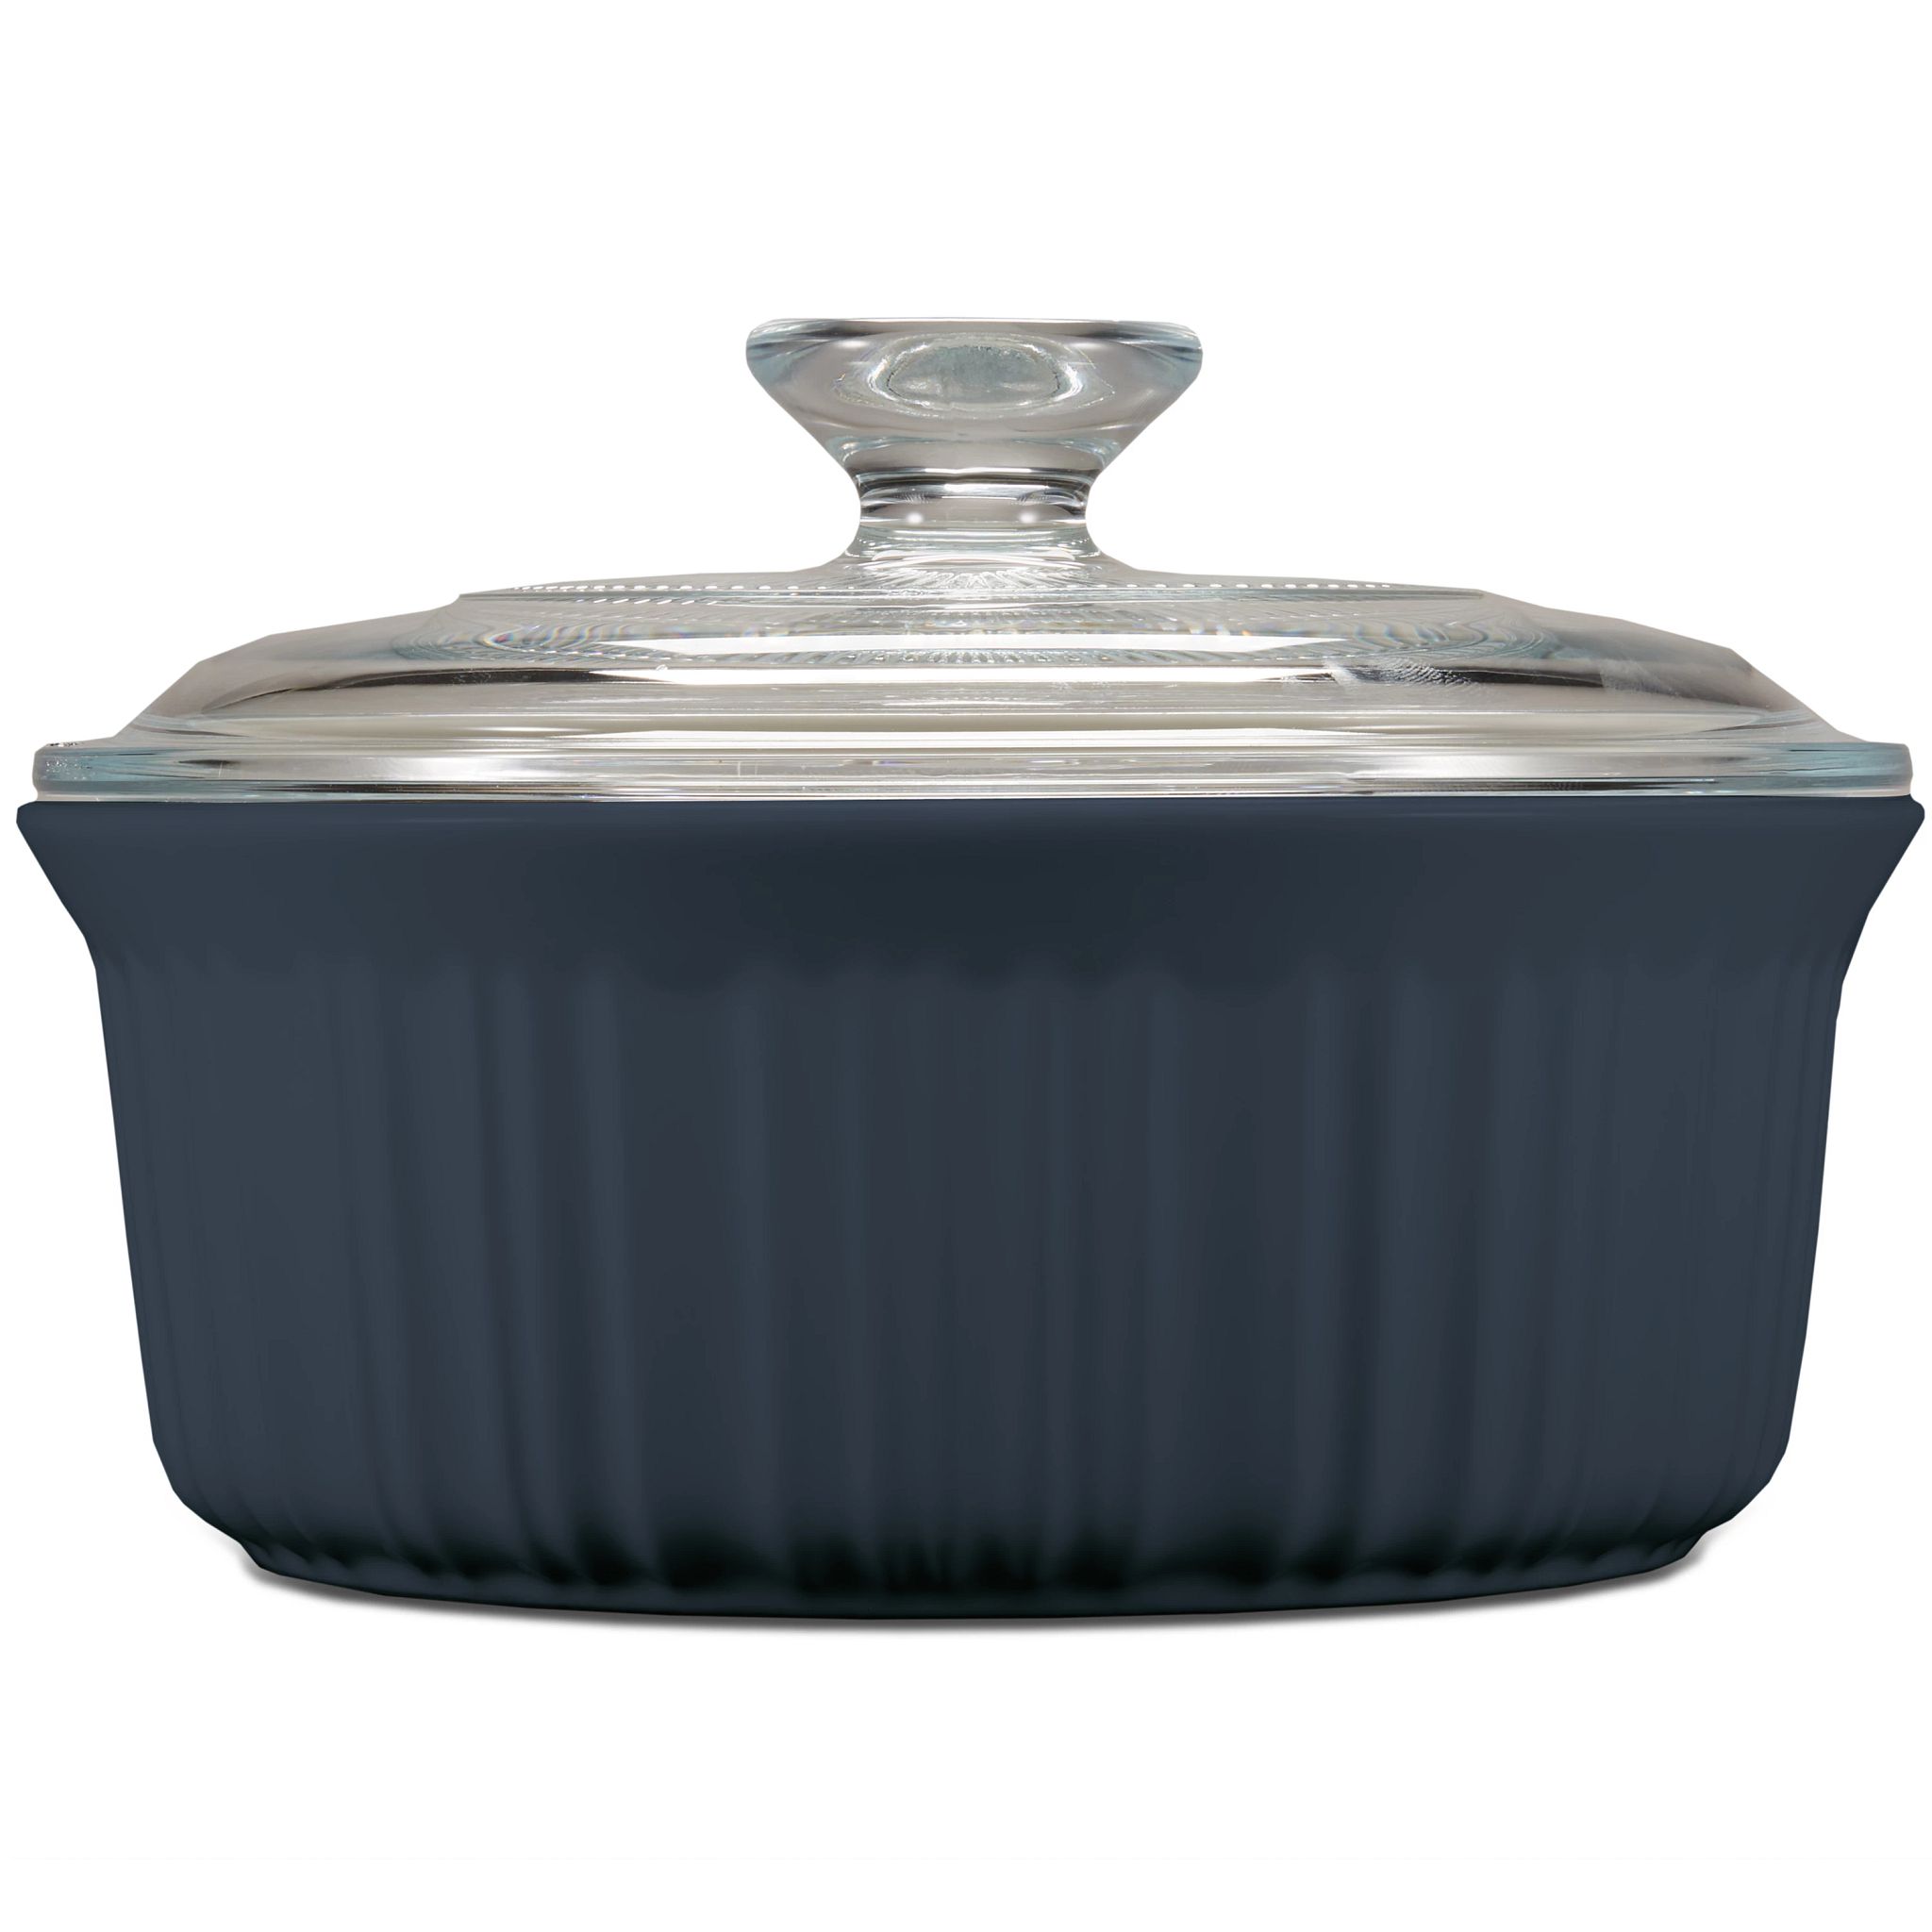 Pyrex 593289 170 ml Borosilicate Evaporating Dish 